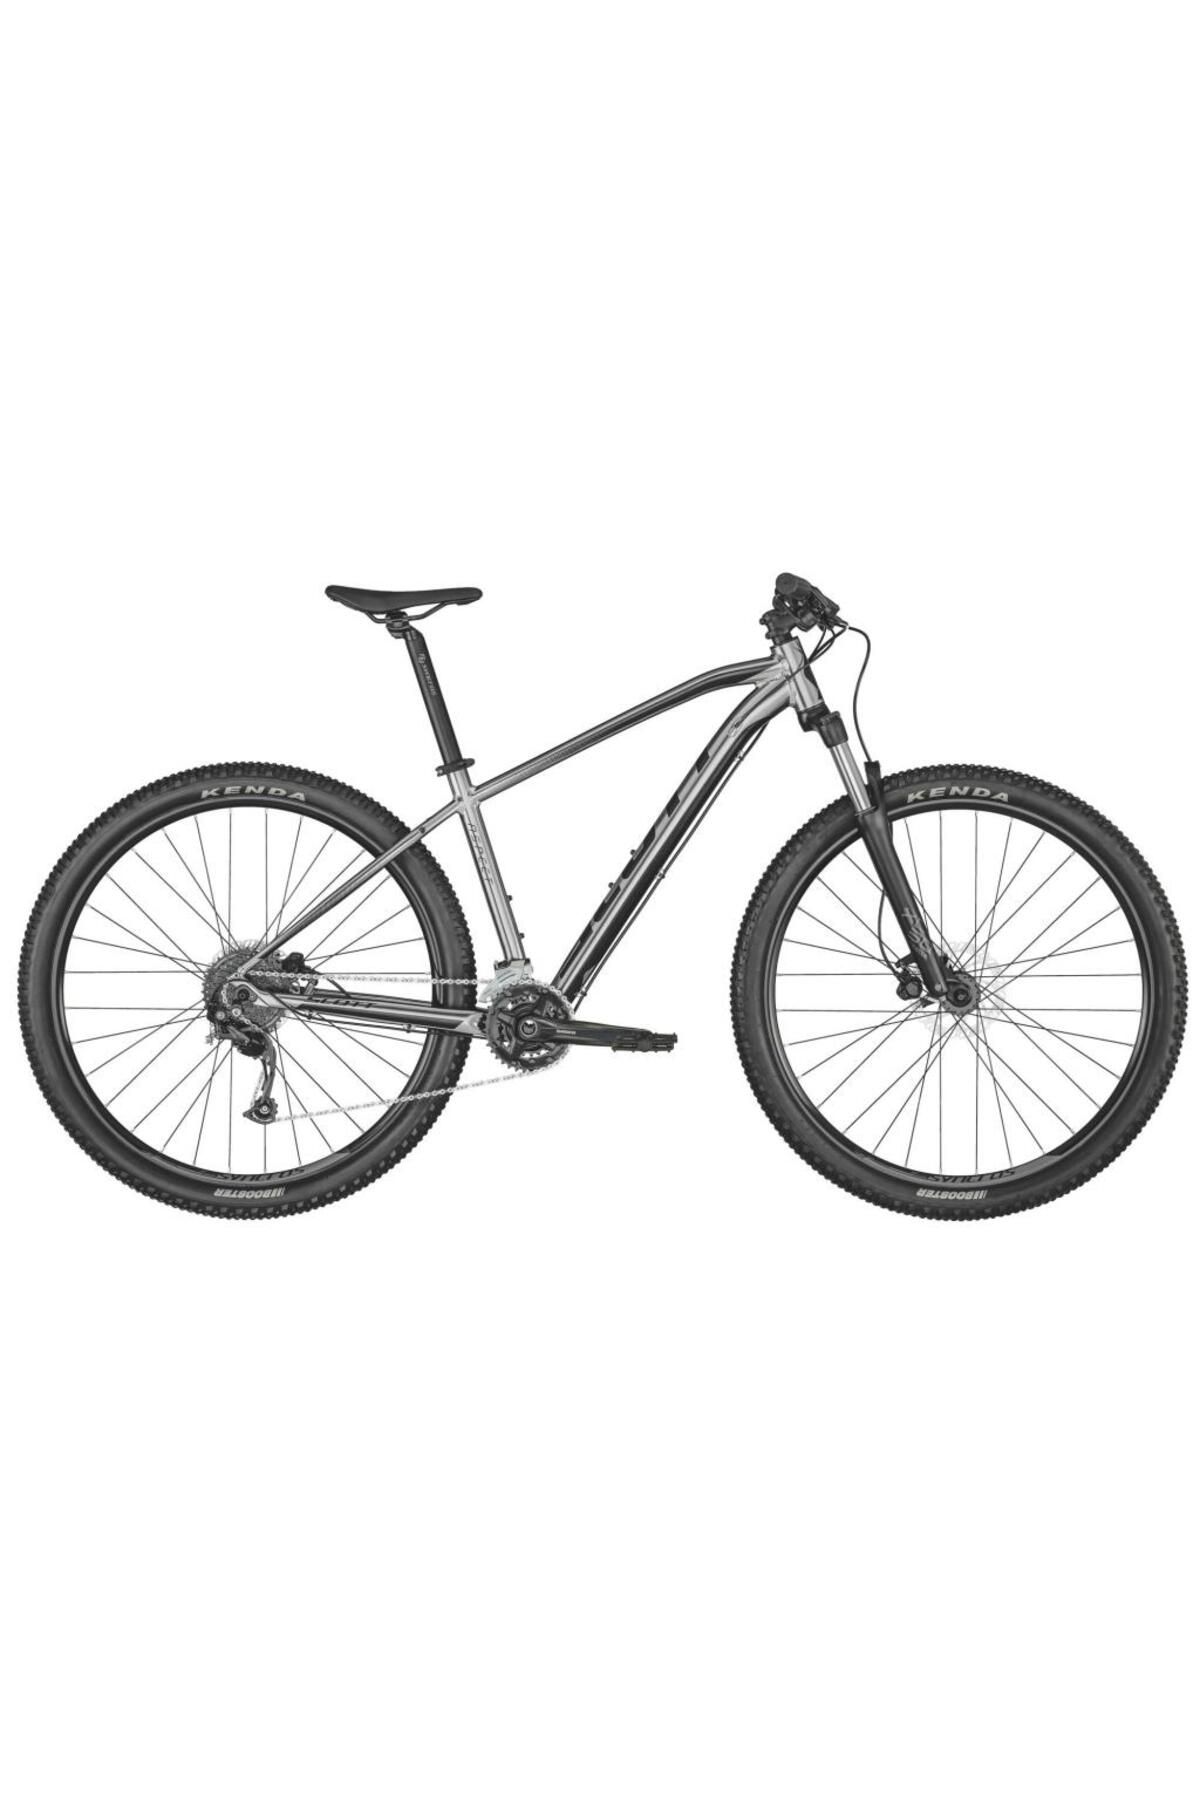 SCOTT Aspect 950 Dağ Bisiklet Slate Grey (xs/13